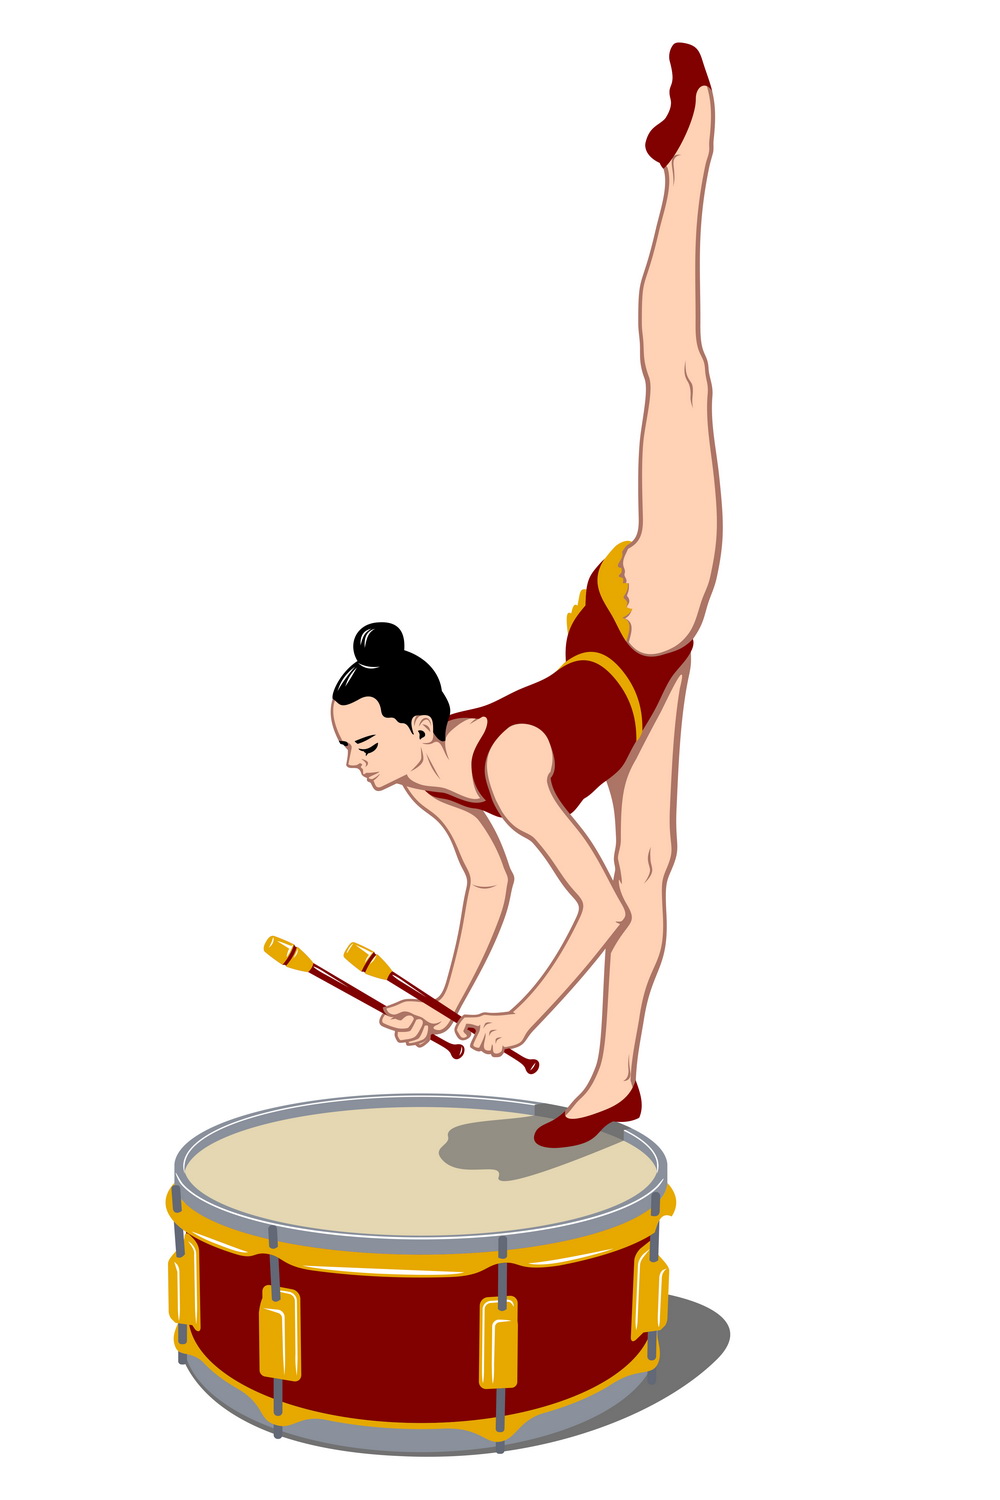 Gymnastics Rhythmic Design Graphics Bundle pinterest image.